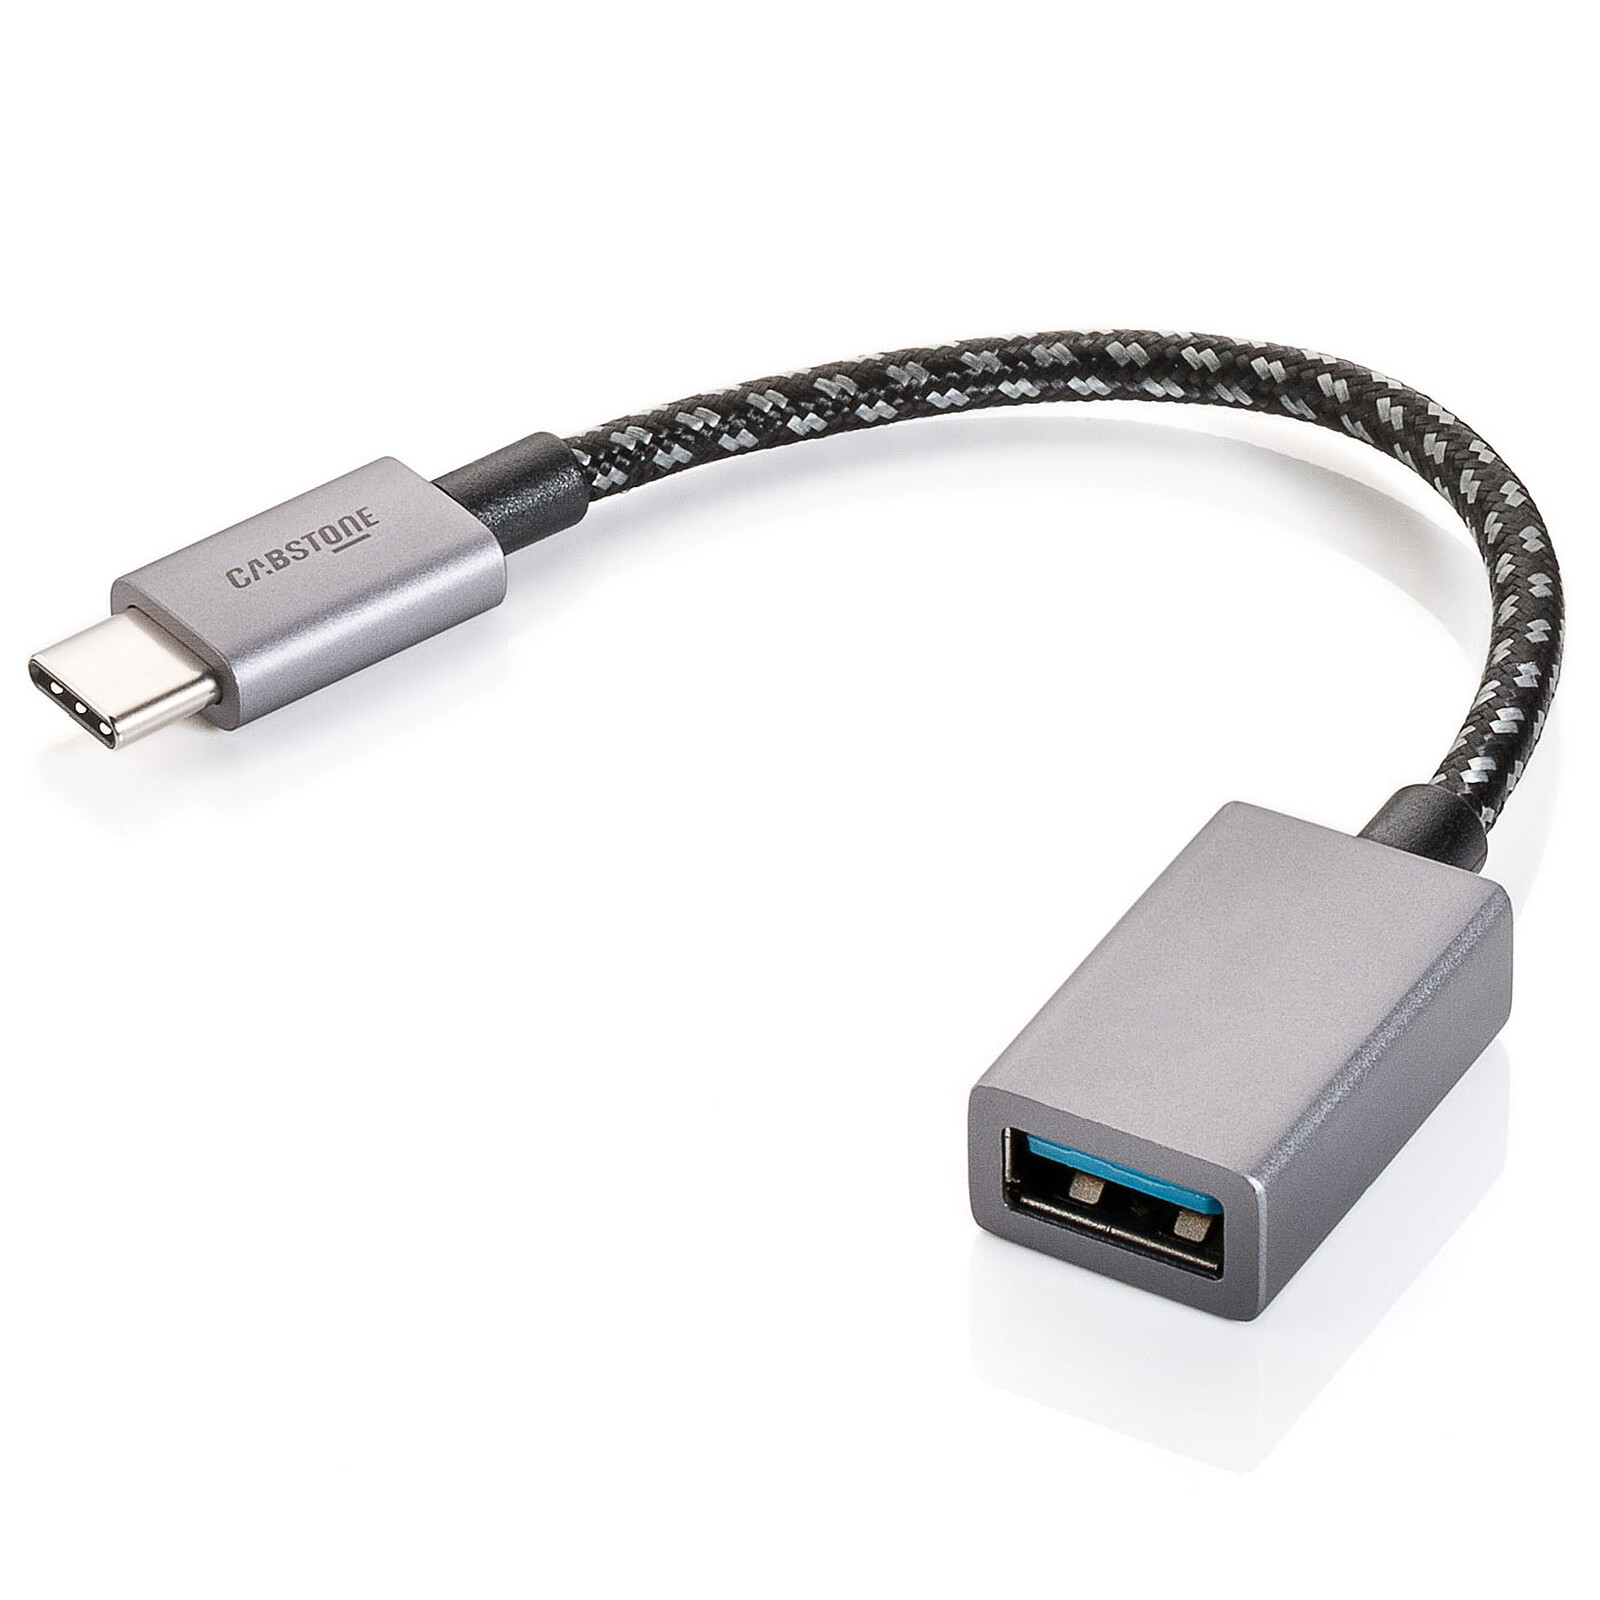 Cabstone Adapter USB-C vers USB 3.0 - USB - Garantie 3 ans LDLC